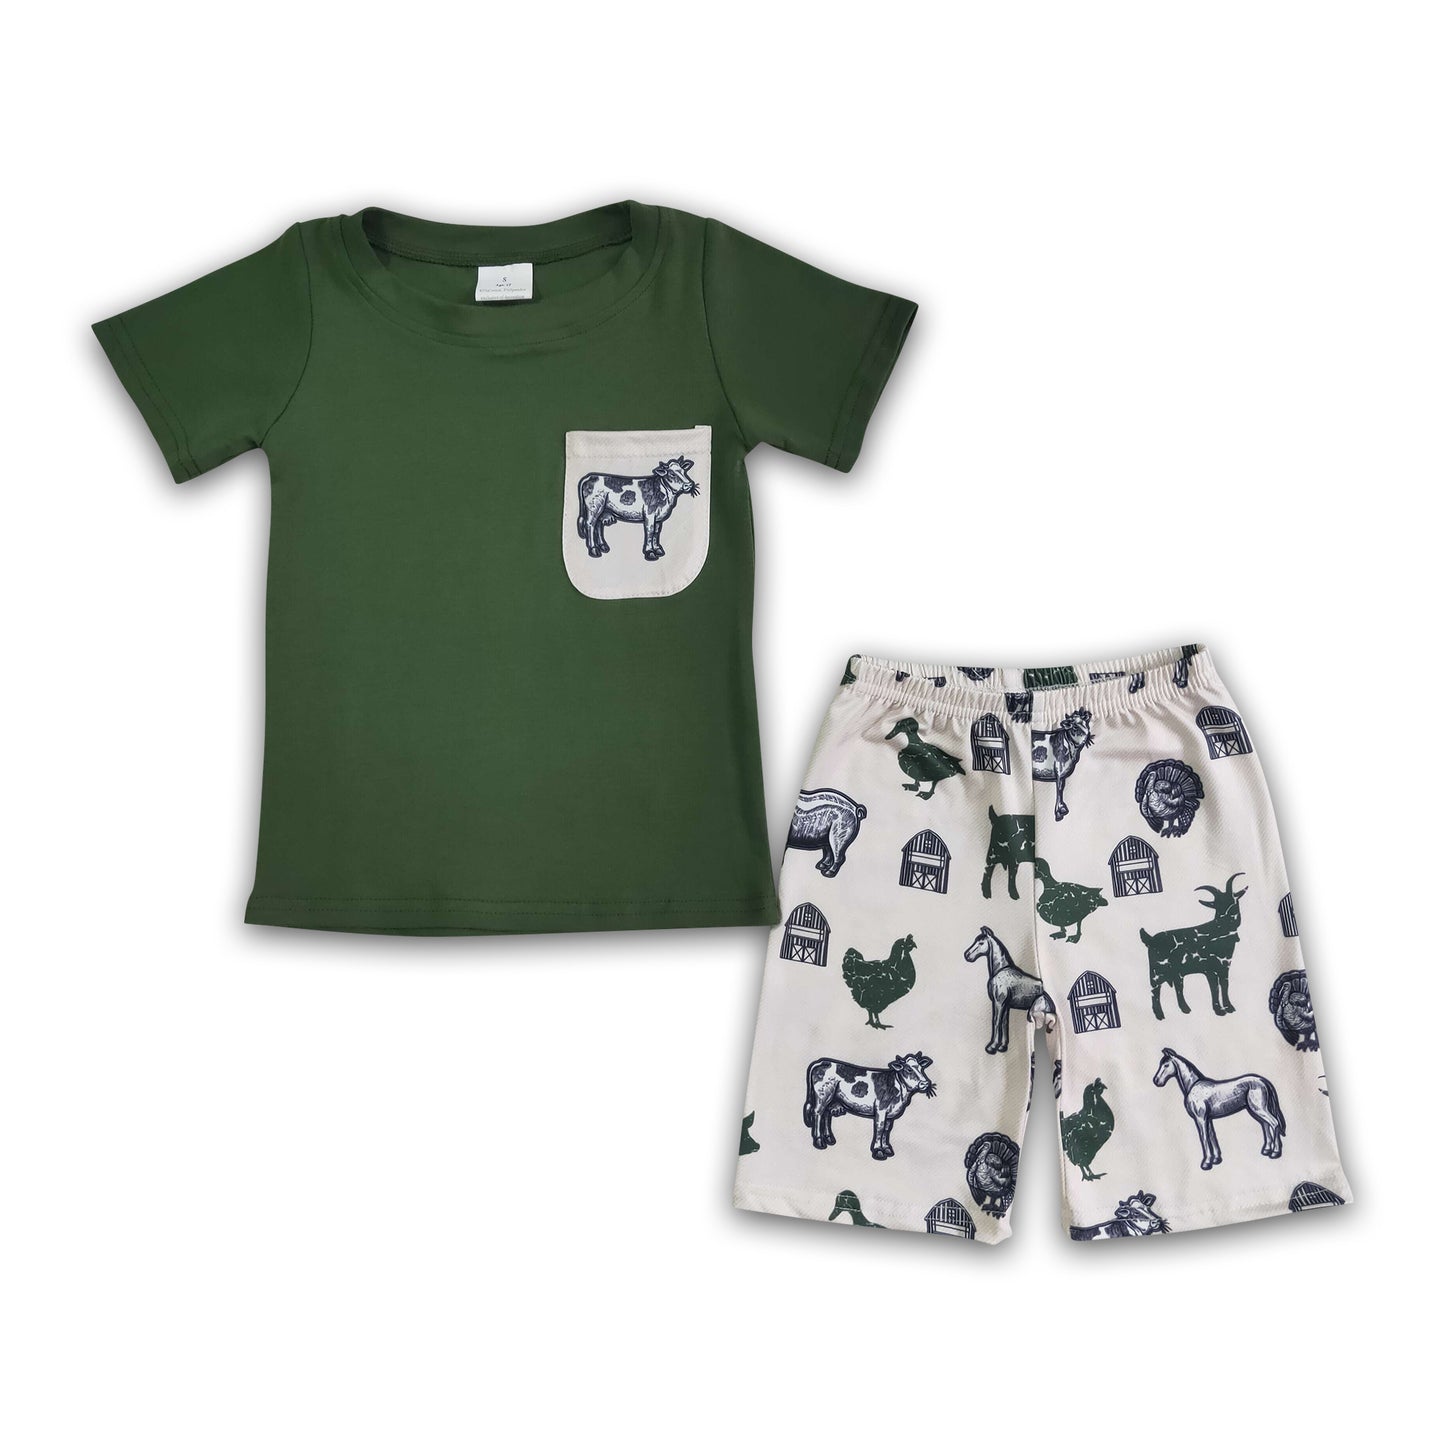 Green shirt farm boy boutique outfits